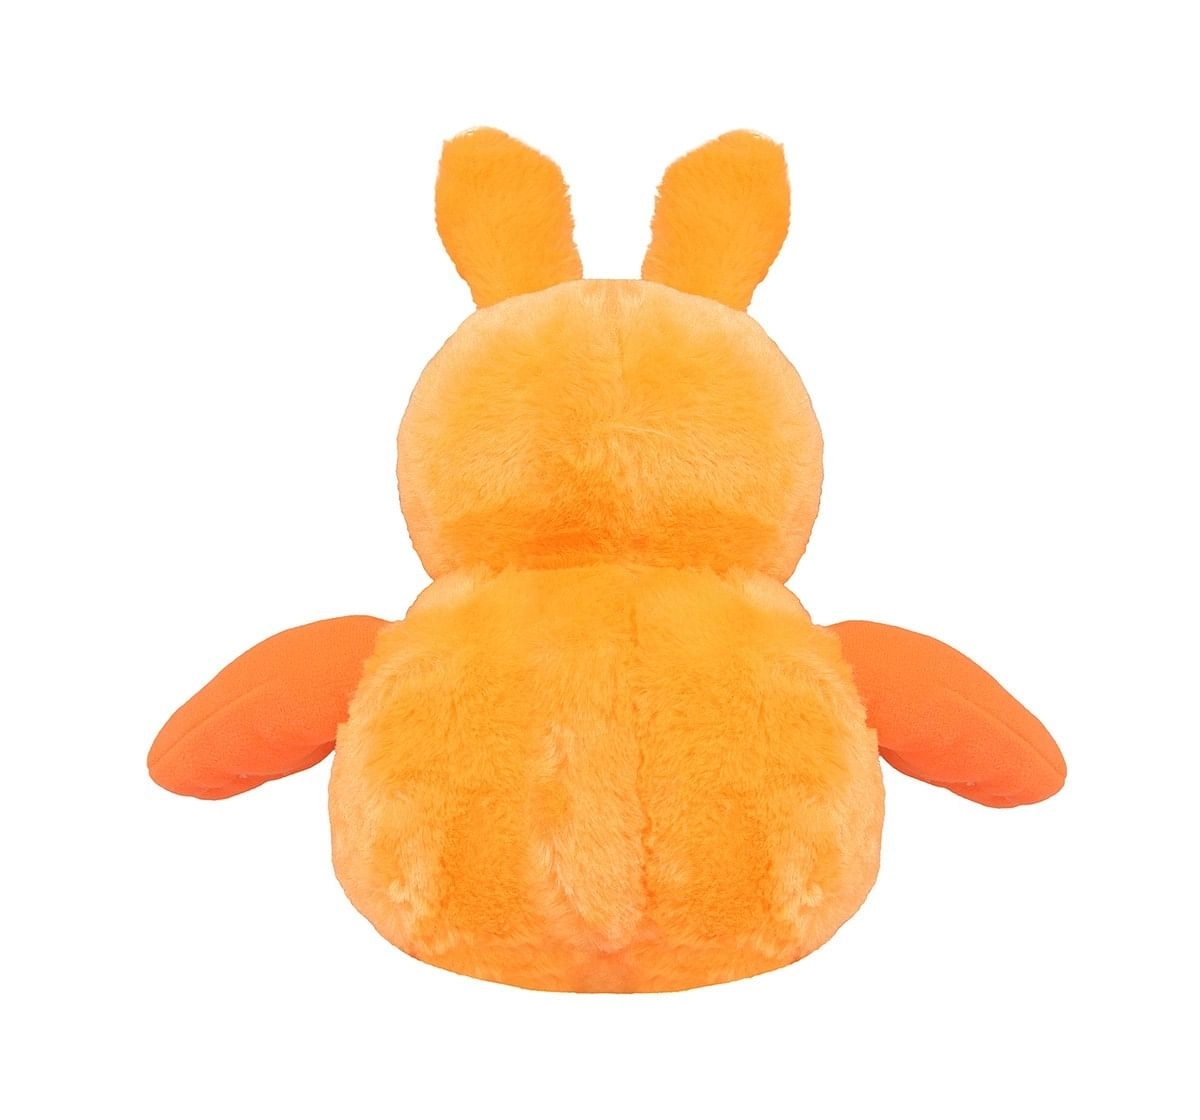 Hamleys Movers & Shakers- Ziggles Orange Interactive Soft Toys for Kids age 2Y+ - 13 Cm (Orange)